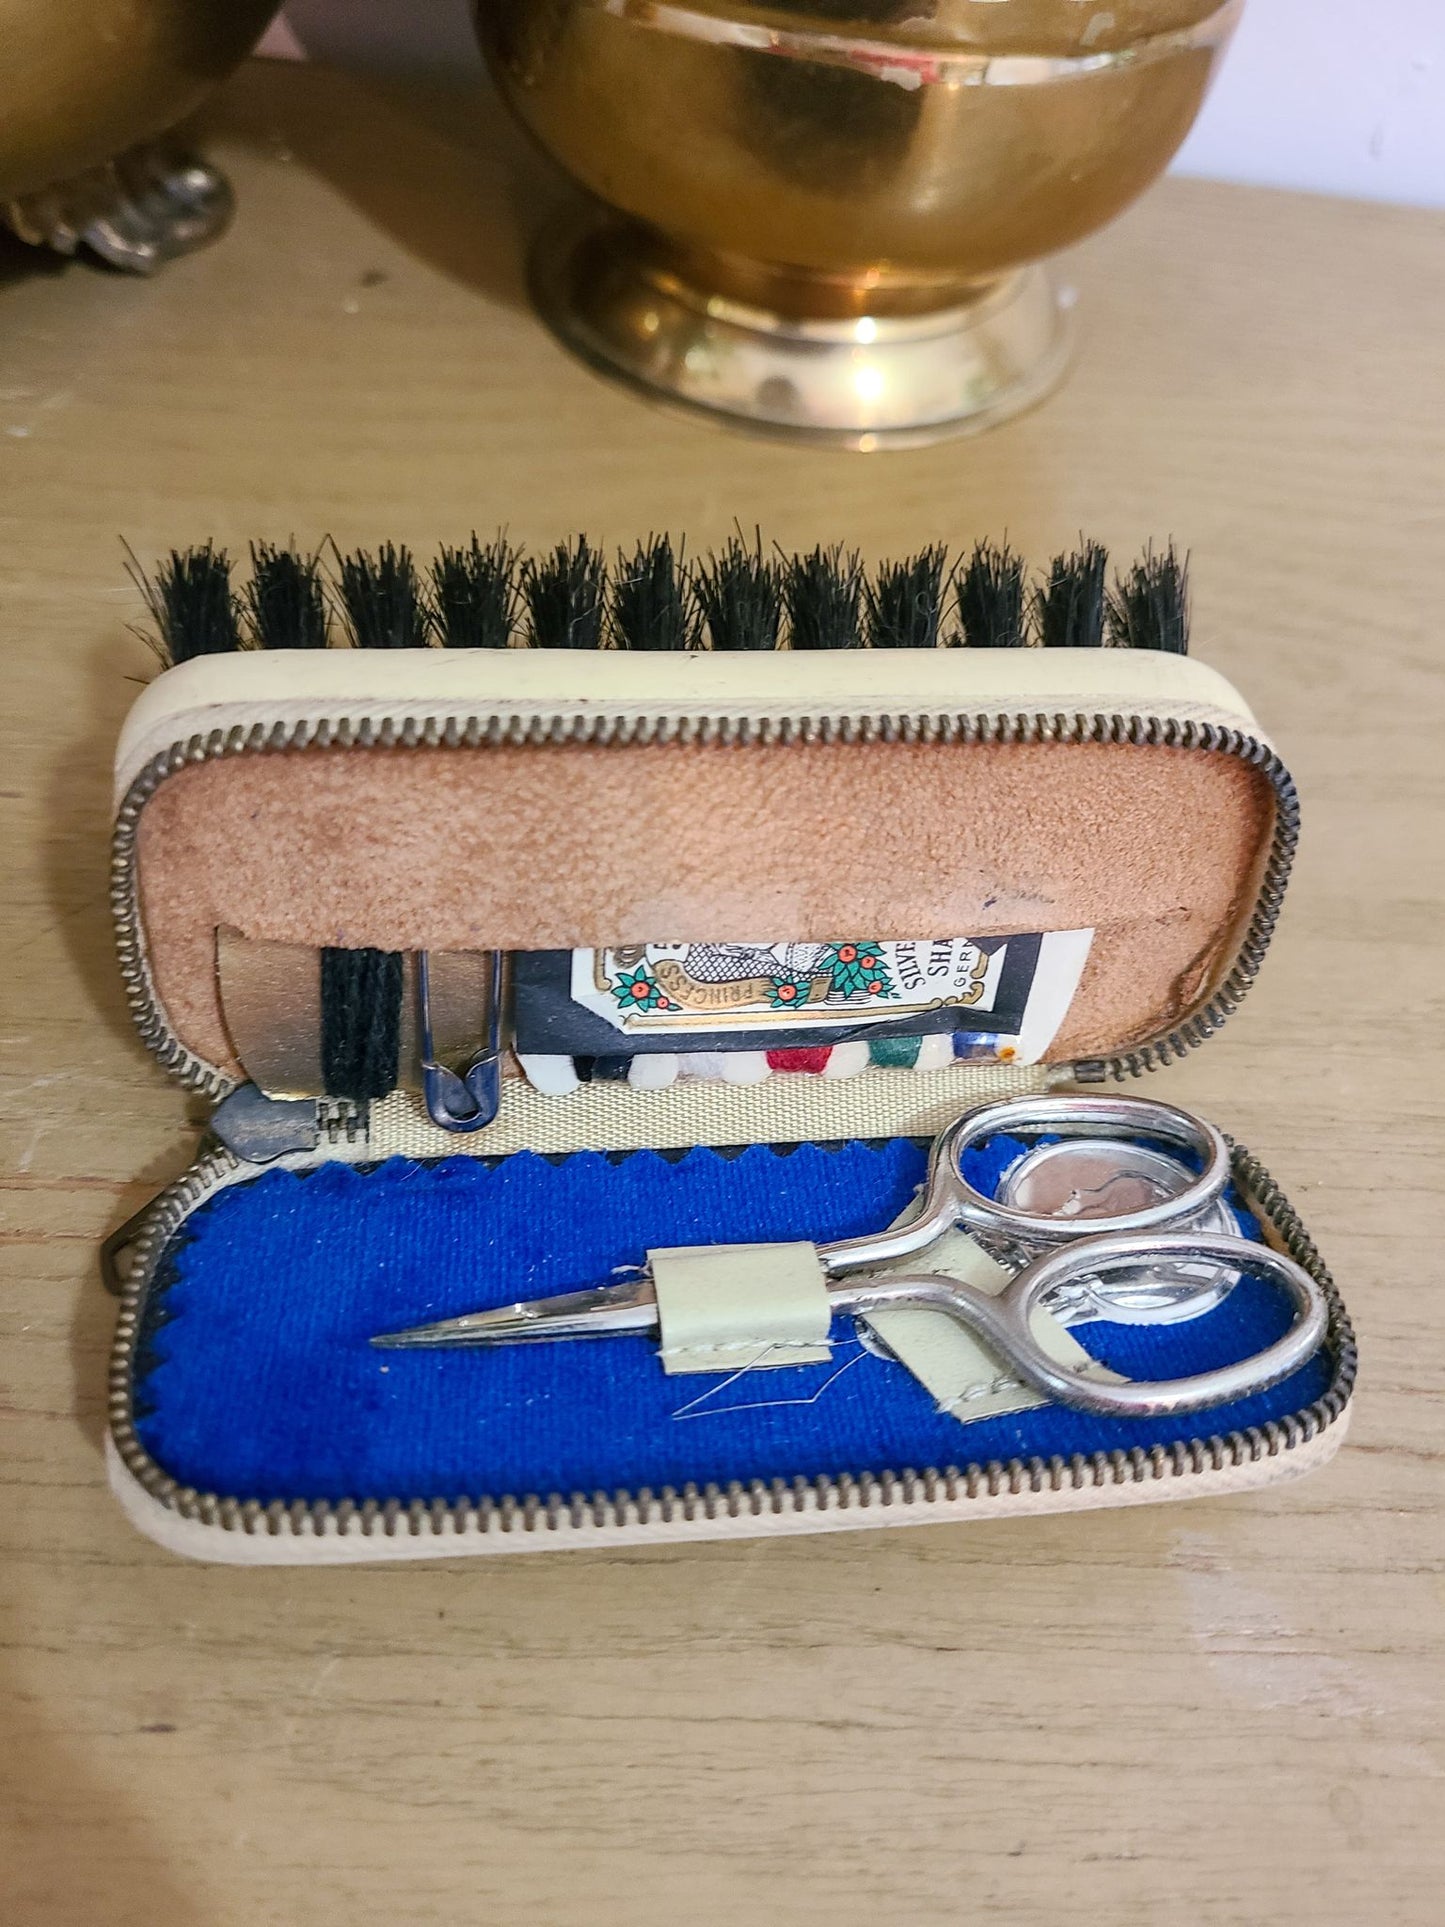 Mini vintage sewing kit/brush